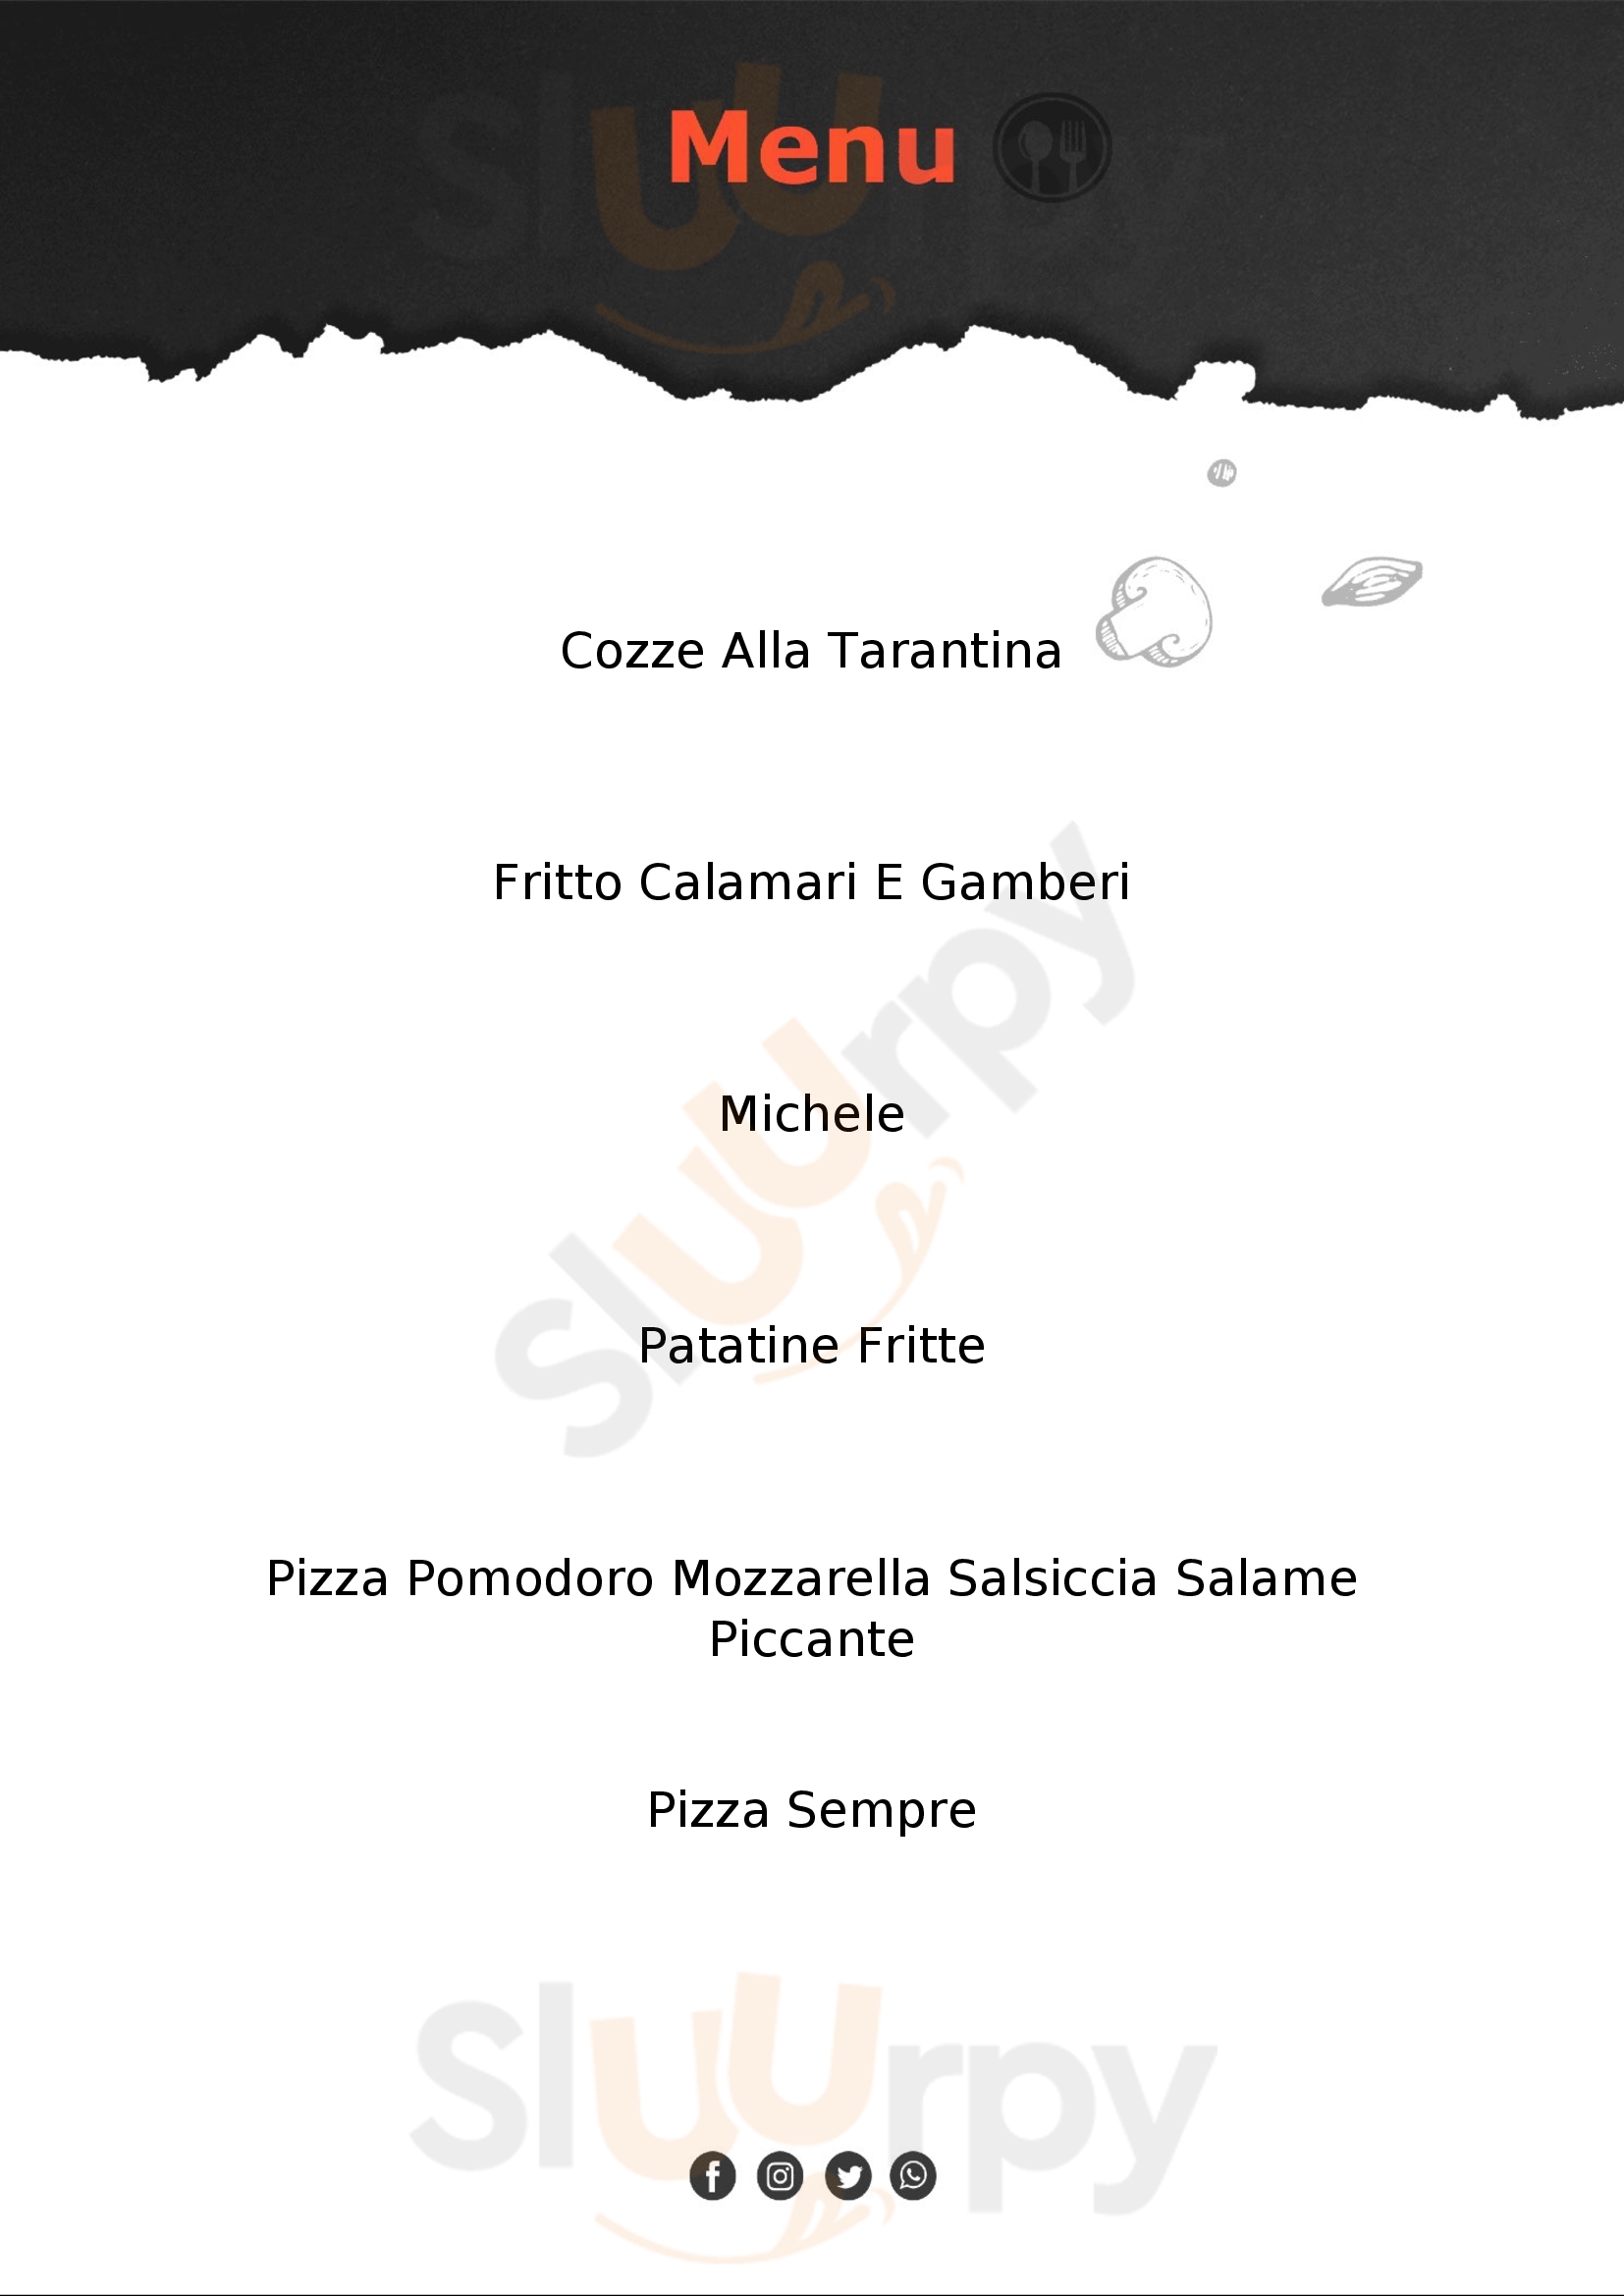 Zeng Pizzeria Ristorante Senigallia menù 1 pagina